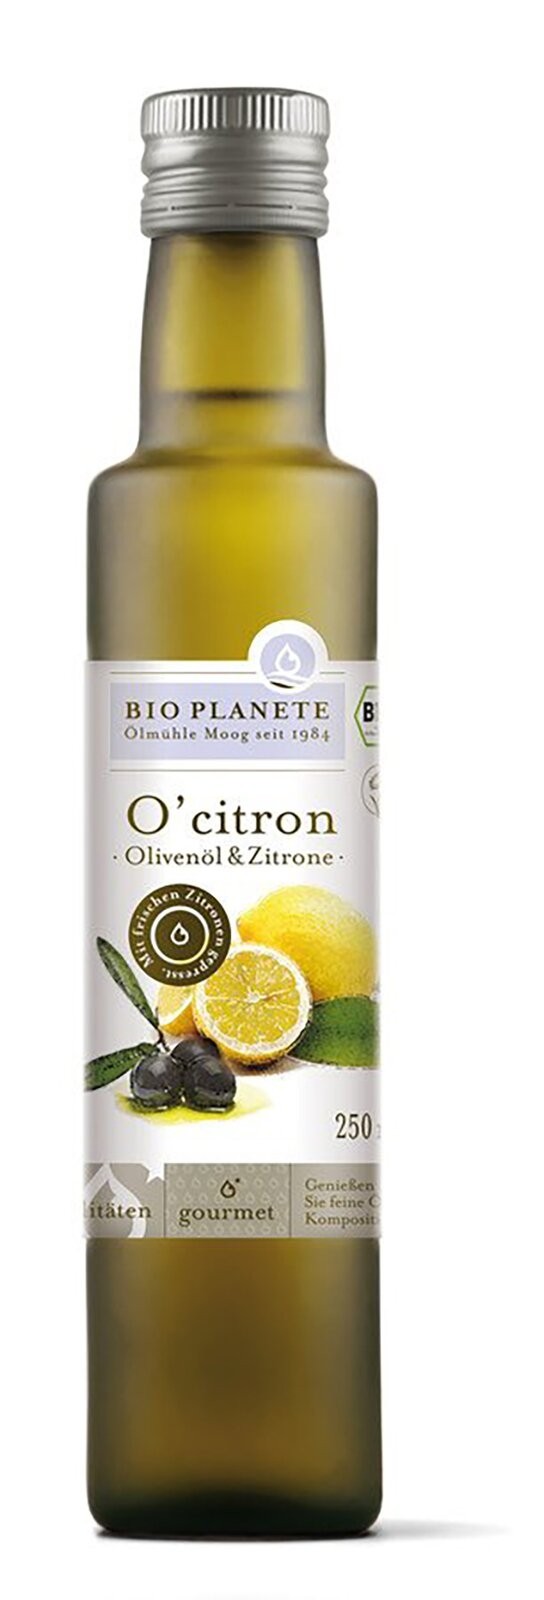 Image of BIO PLANETE Olivenöl & Zitrone (250ml)